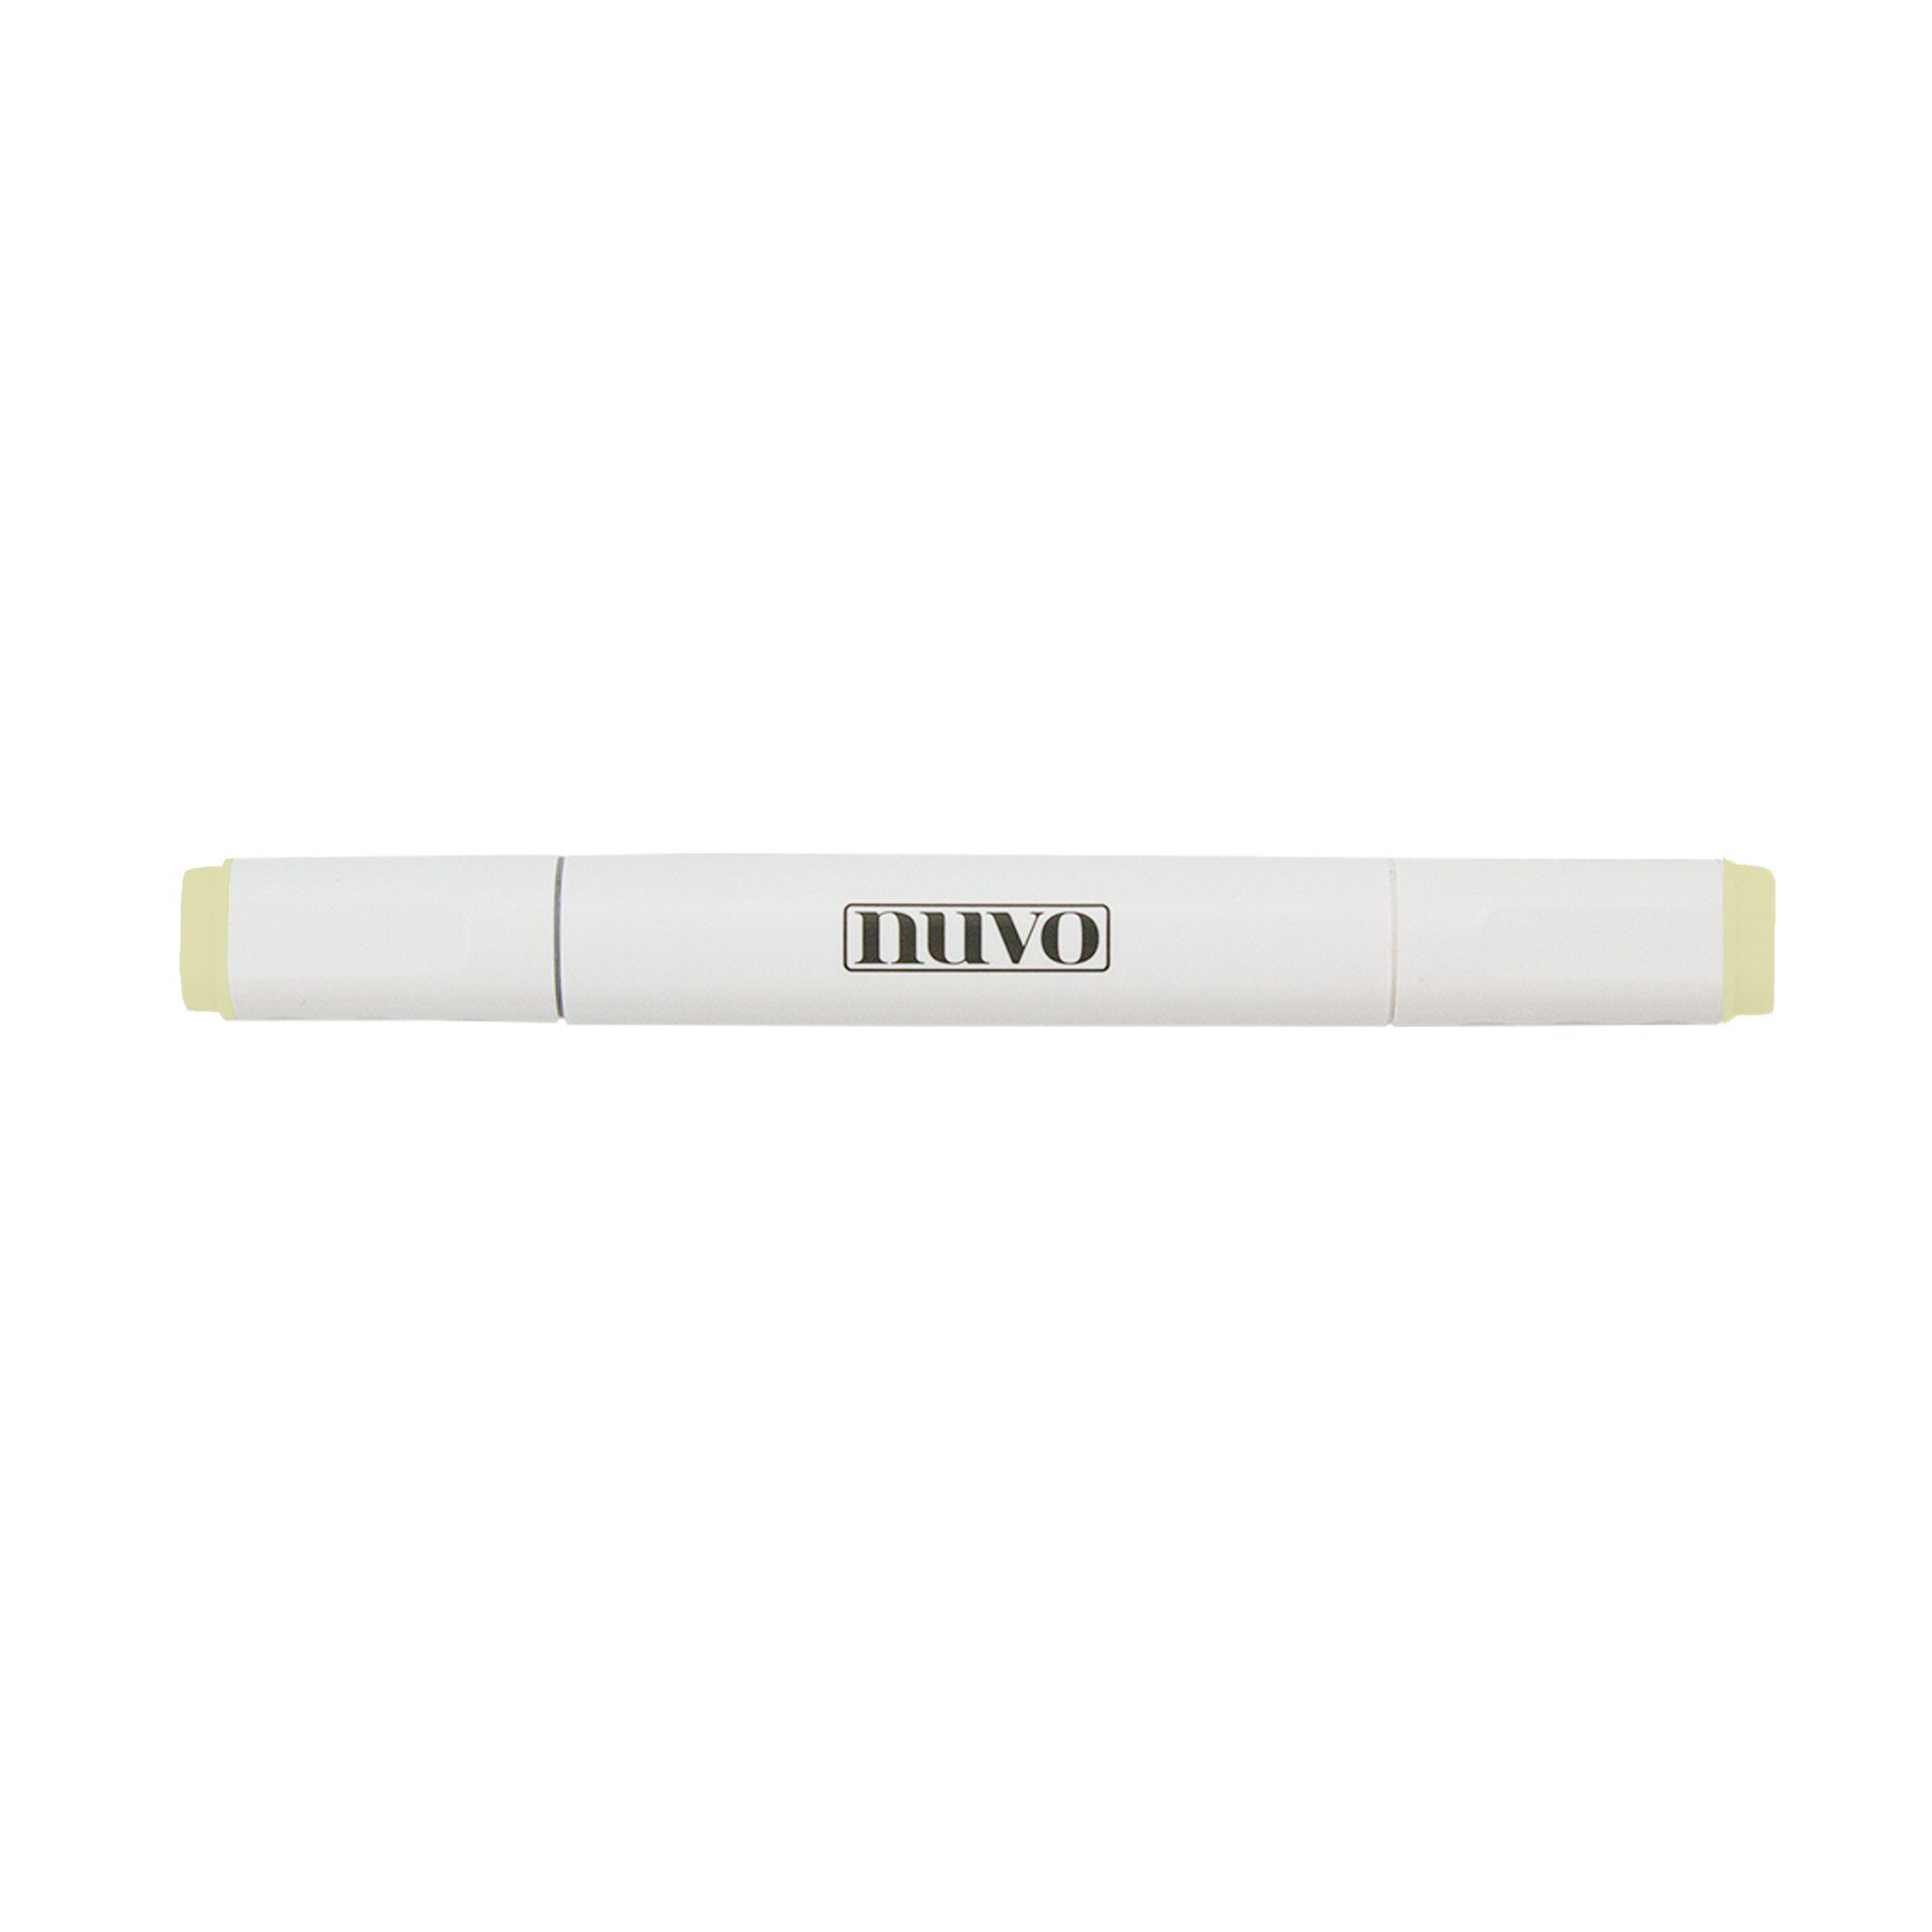 Nuvo - Single Marker Pen Collection - White Grape - 408N – Tonic Studios USA